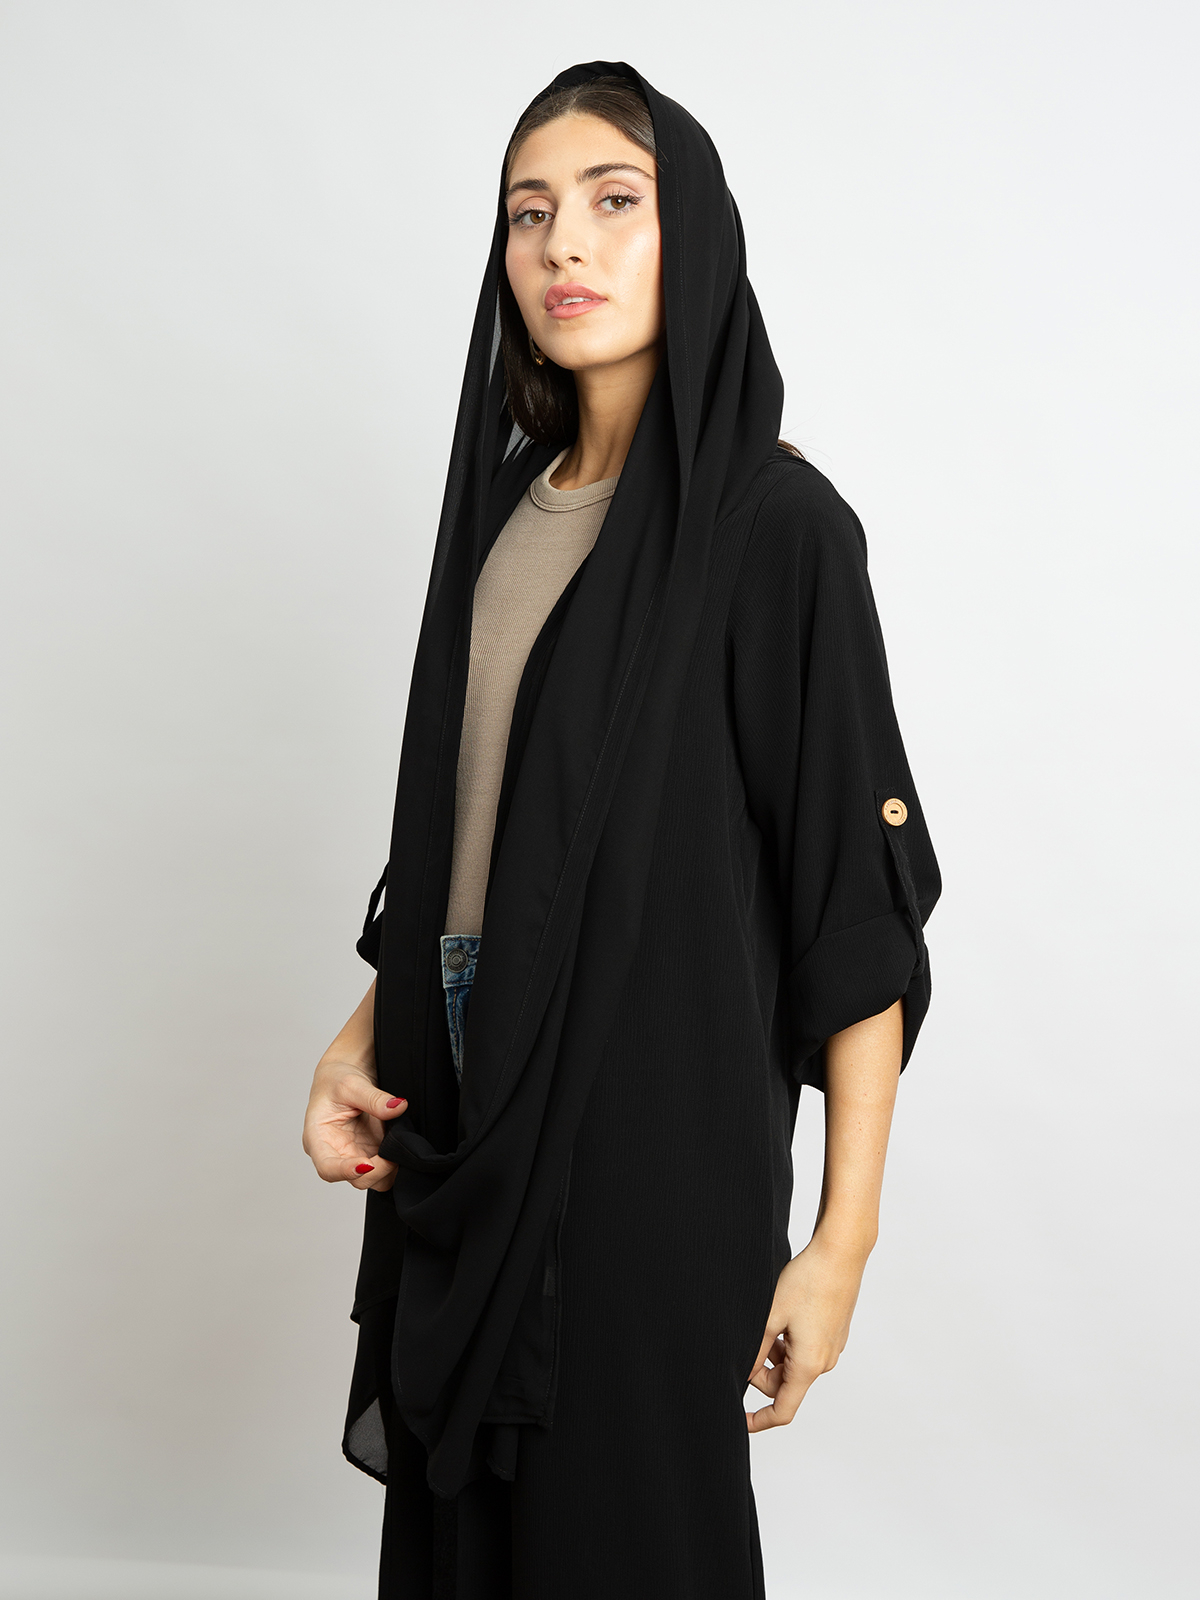 Black - Long Regular-fit Open Abaya with Hoodie in Fancy Yoryu Fabric